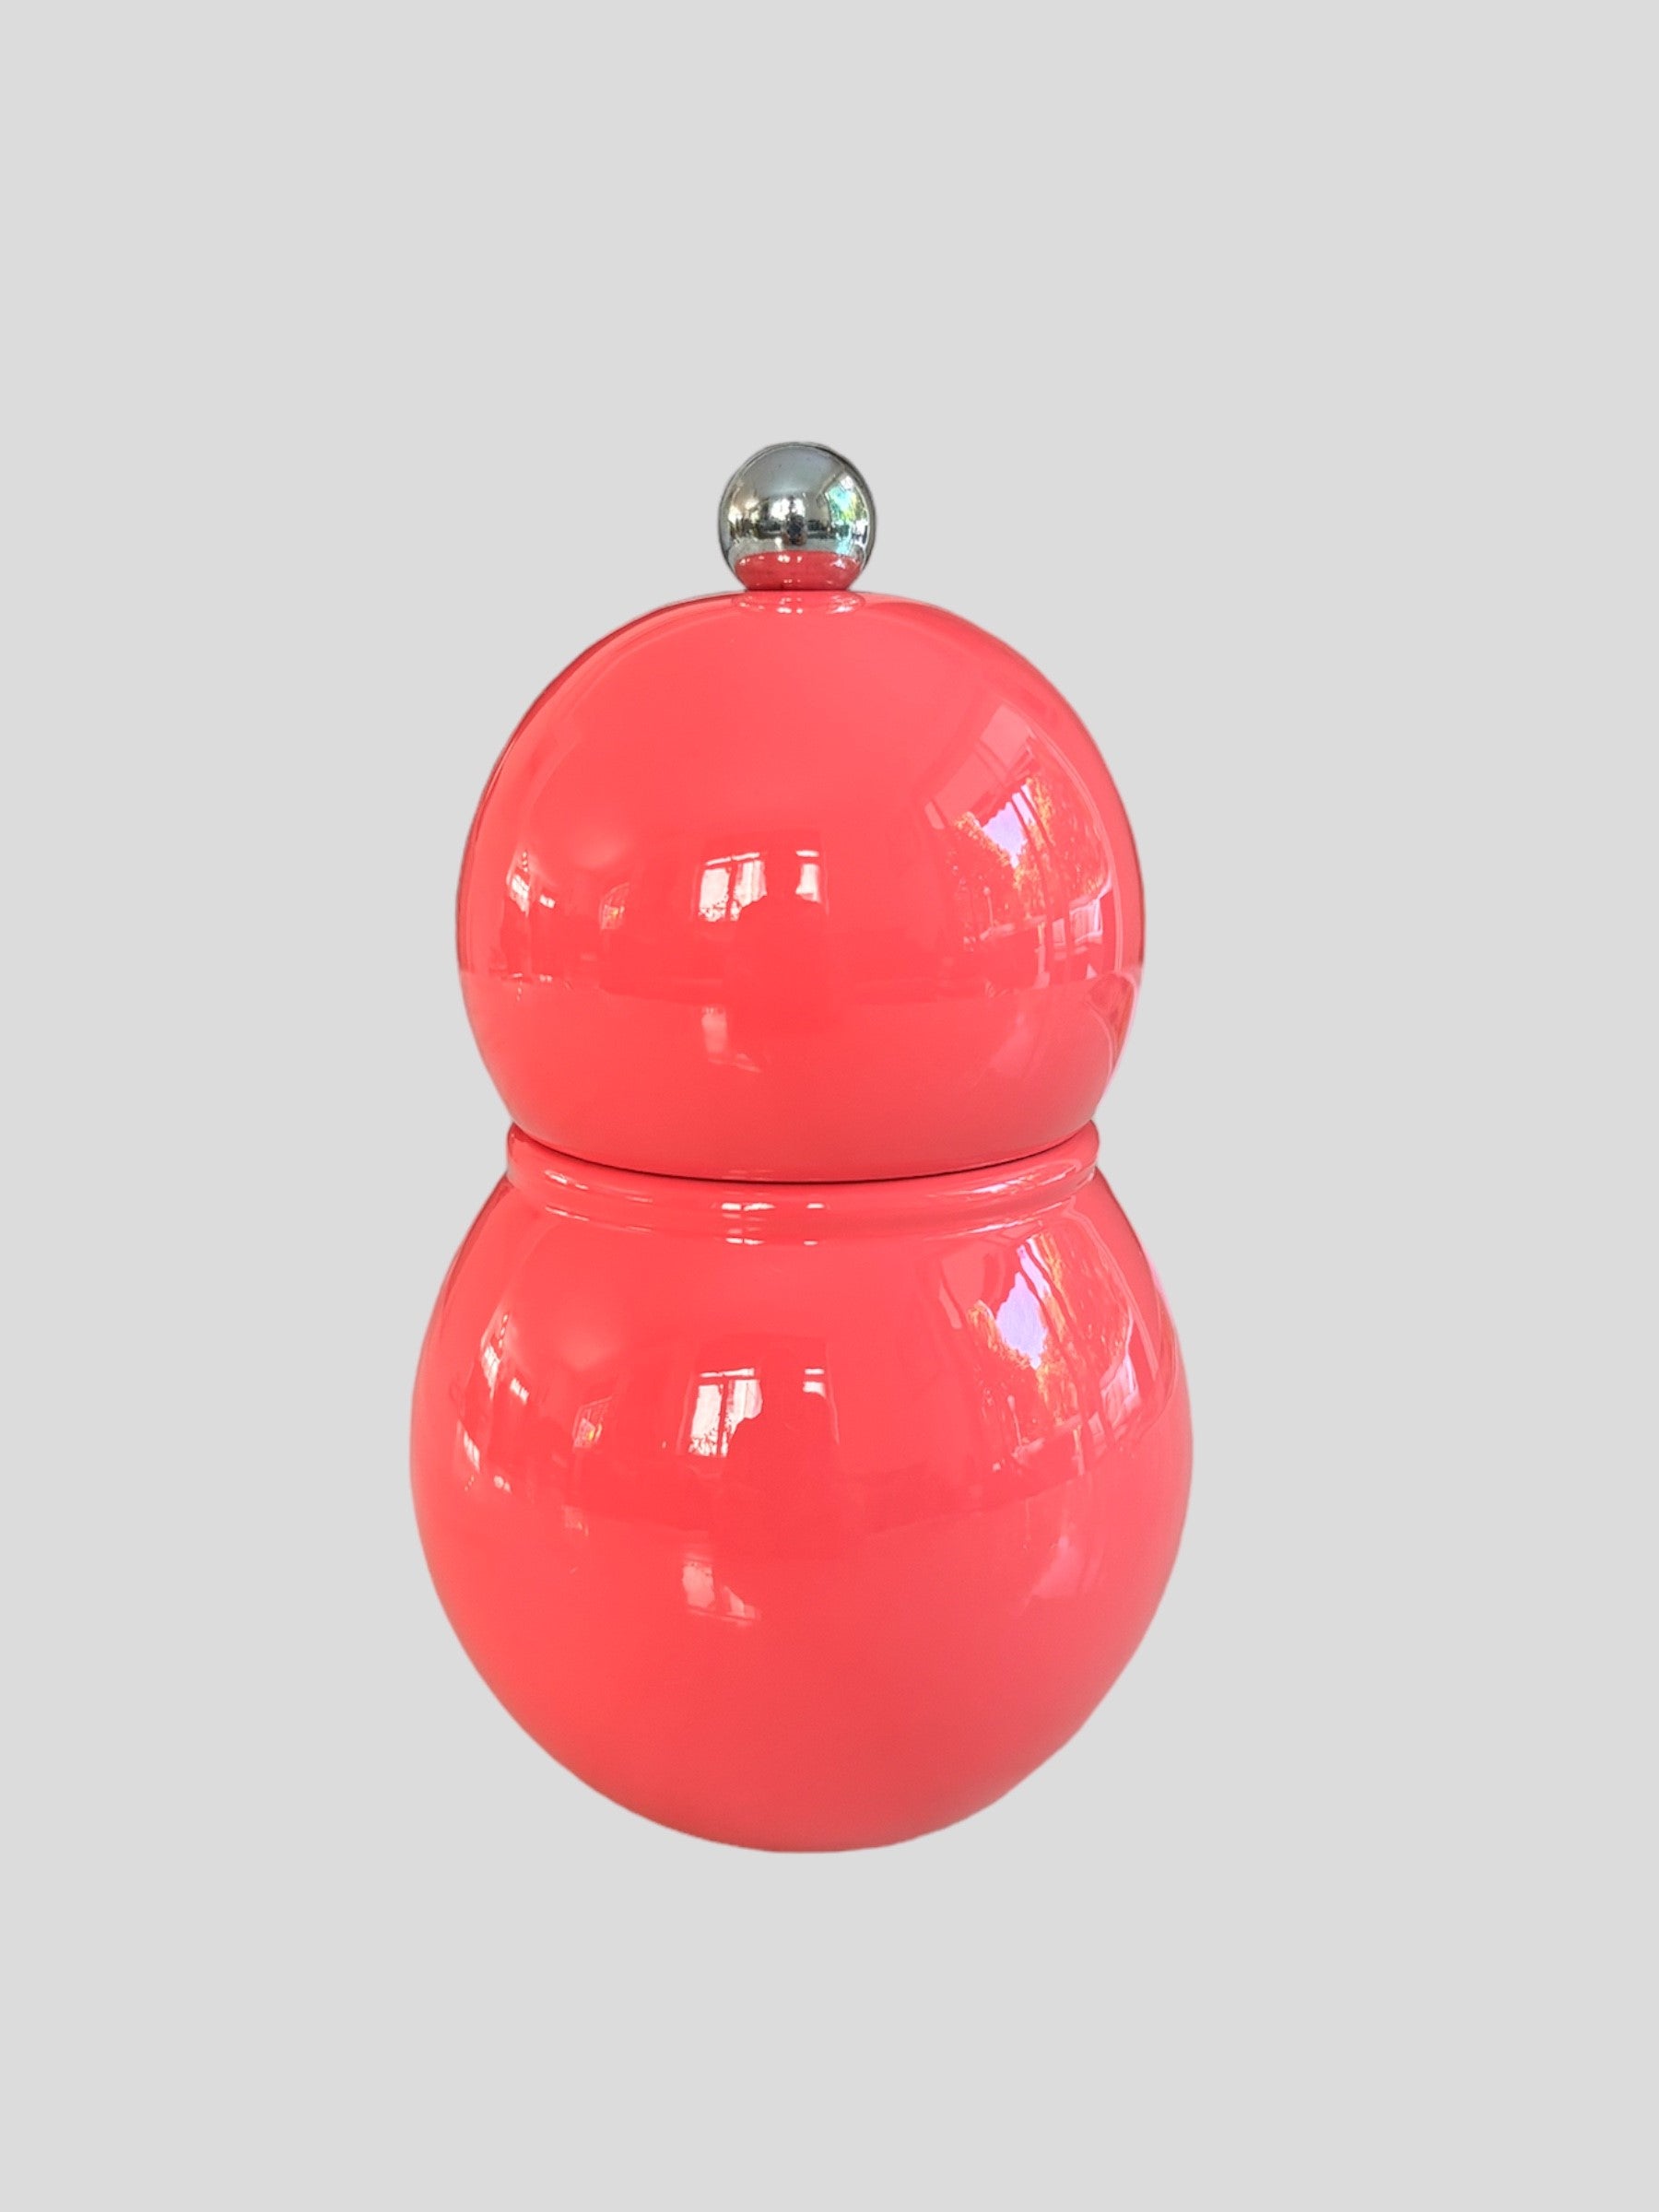 A watermelon 'Chubbie' salt & pepper grinder from Addison Ross. Small, bobbin shaped.